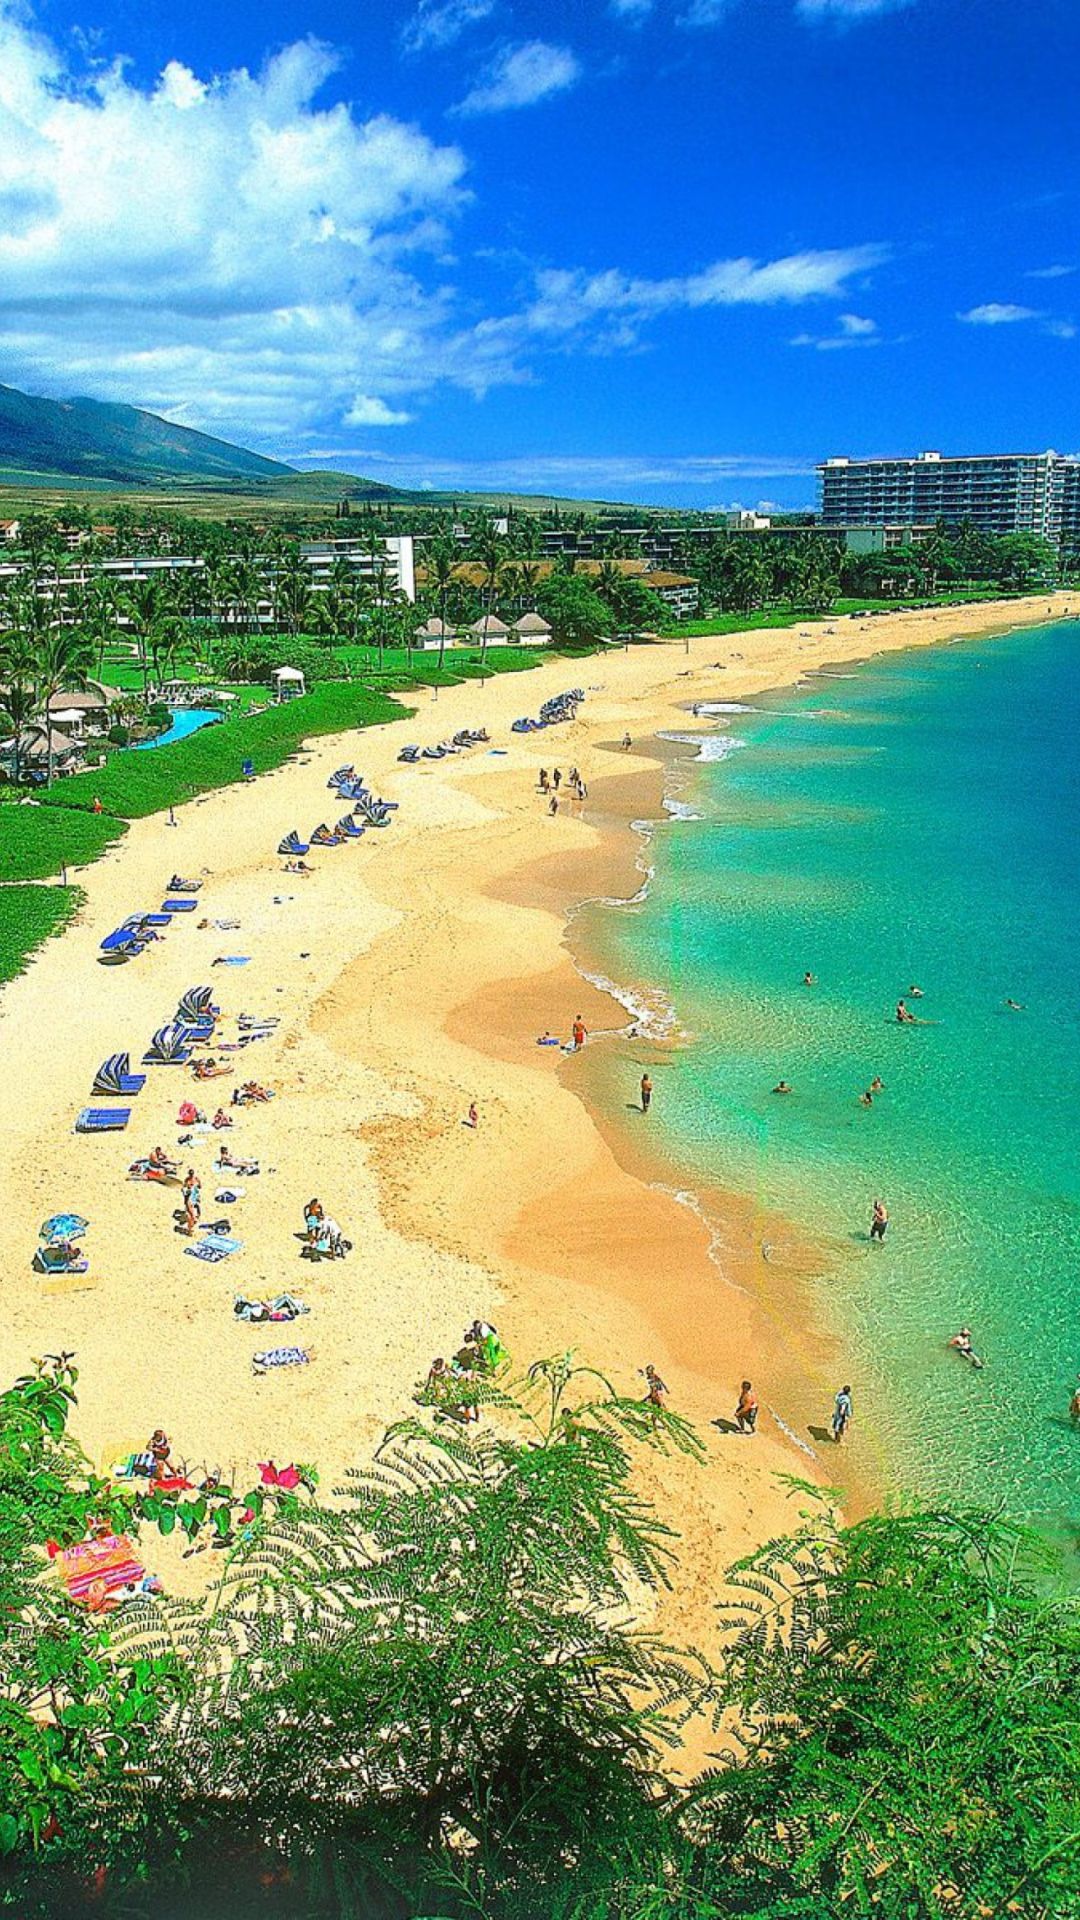 Background Kaanapali Beach Maui Hawaii For iPhone Plus Full HD